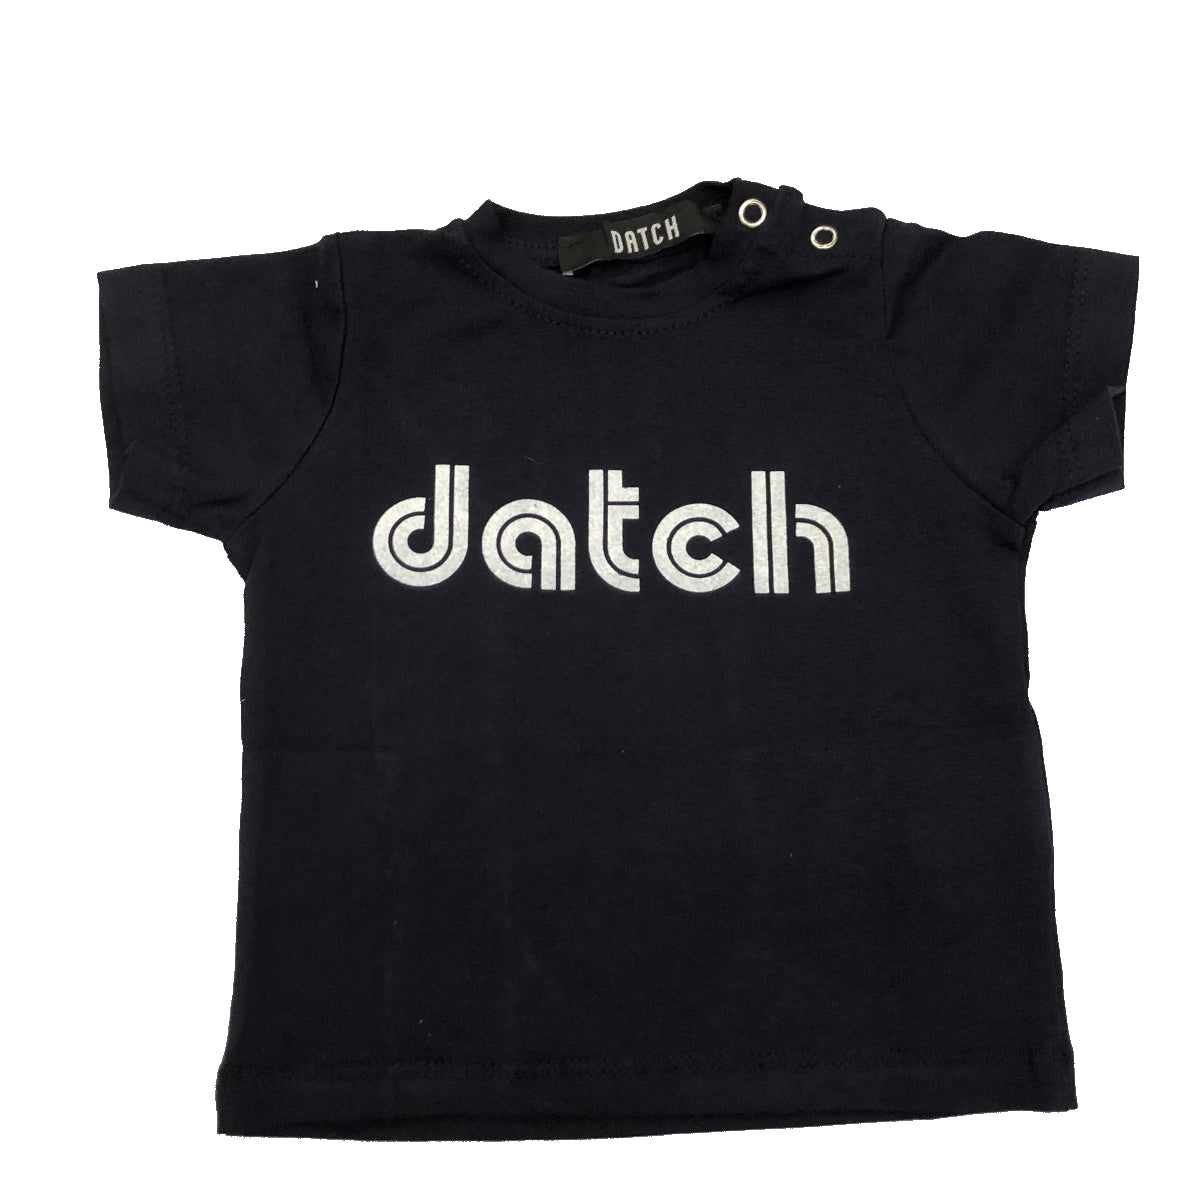 Datch T-shirt DTH 109/N